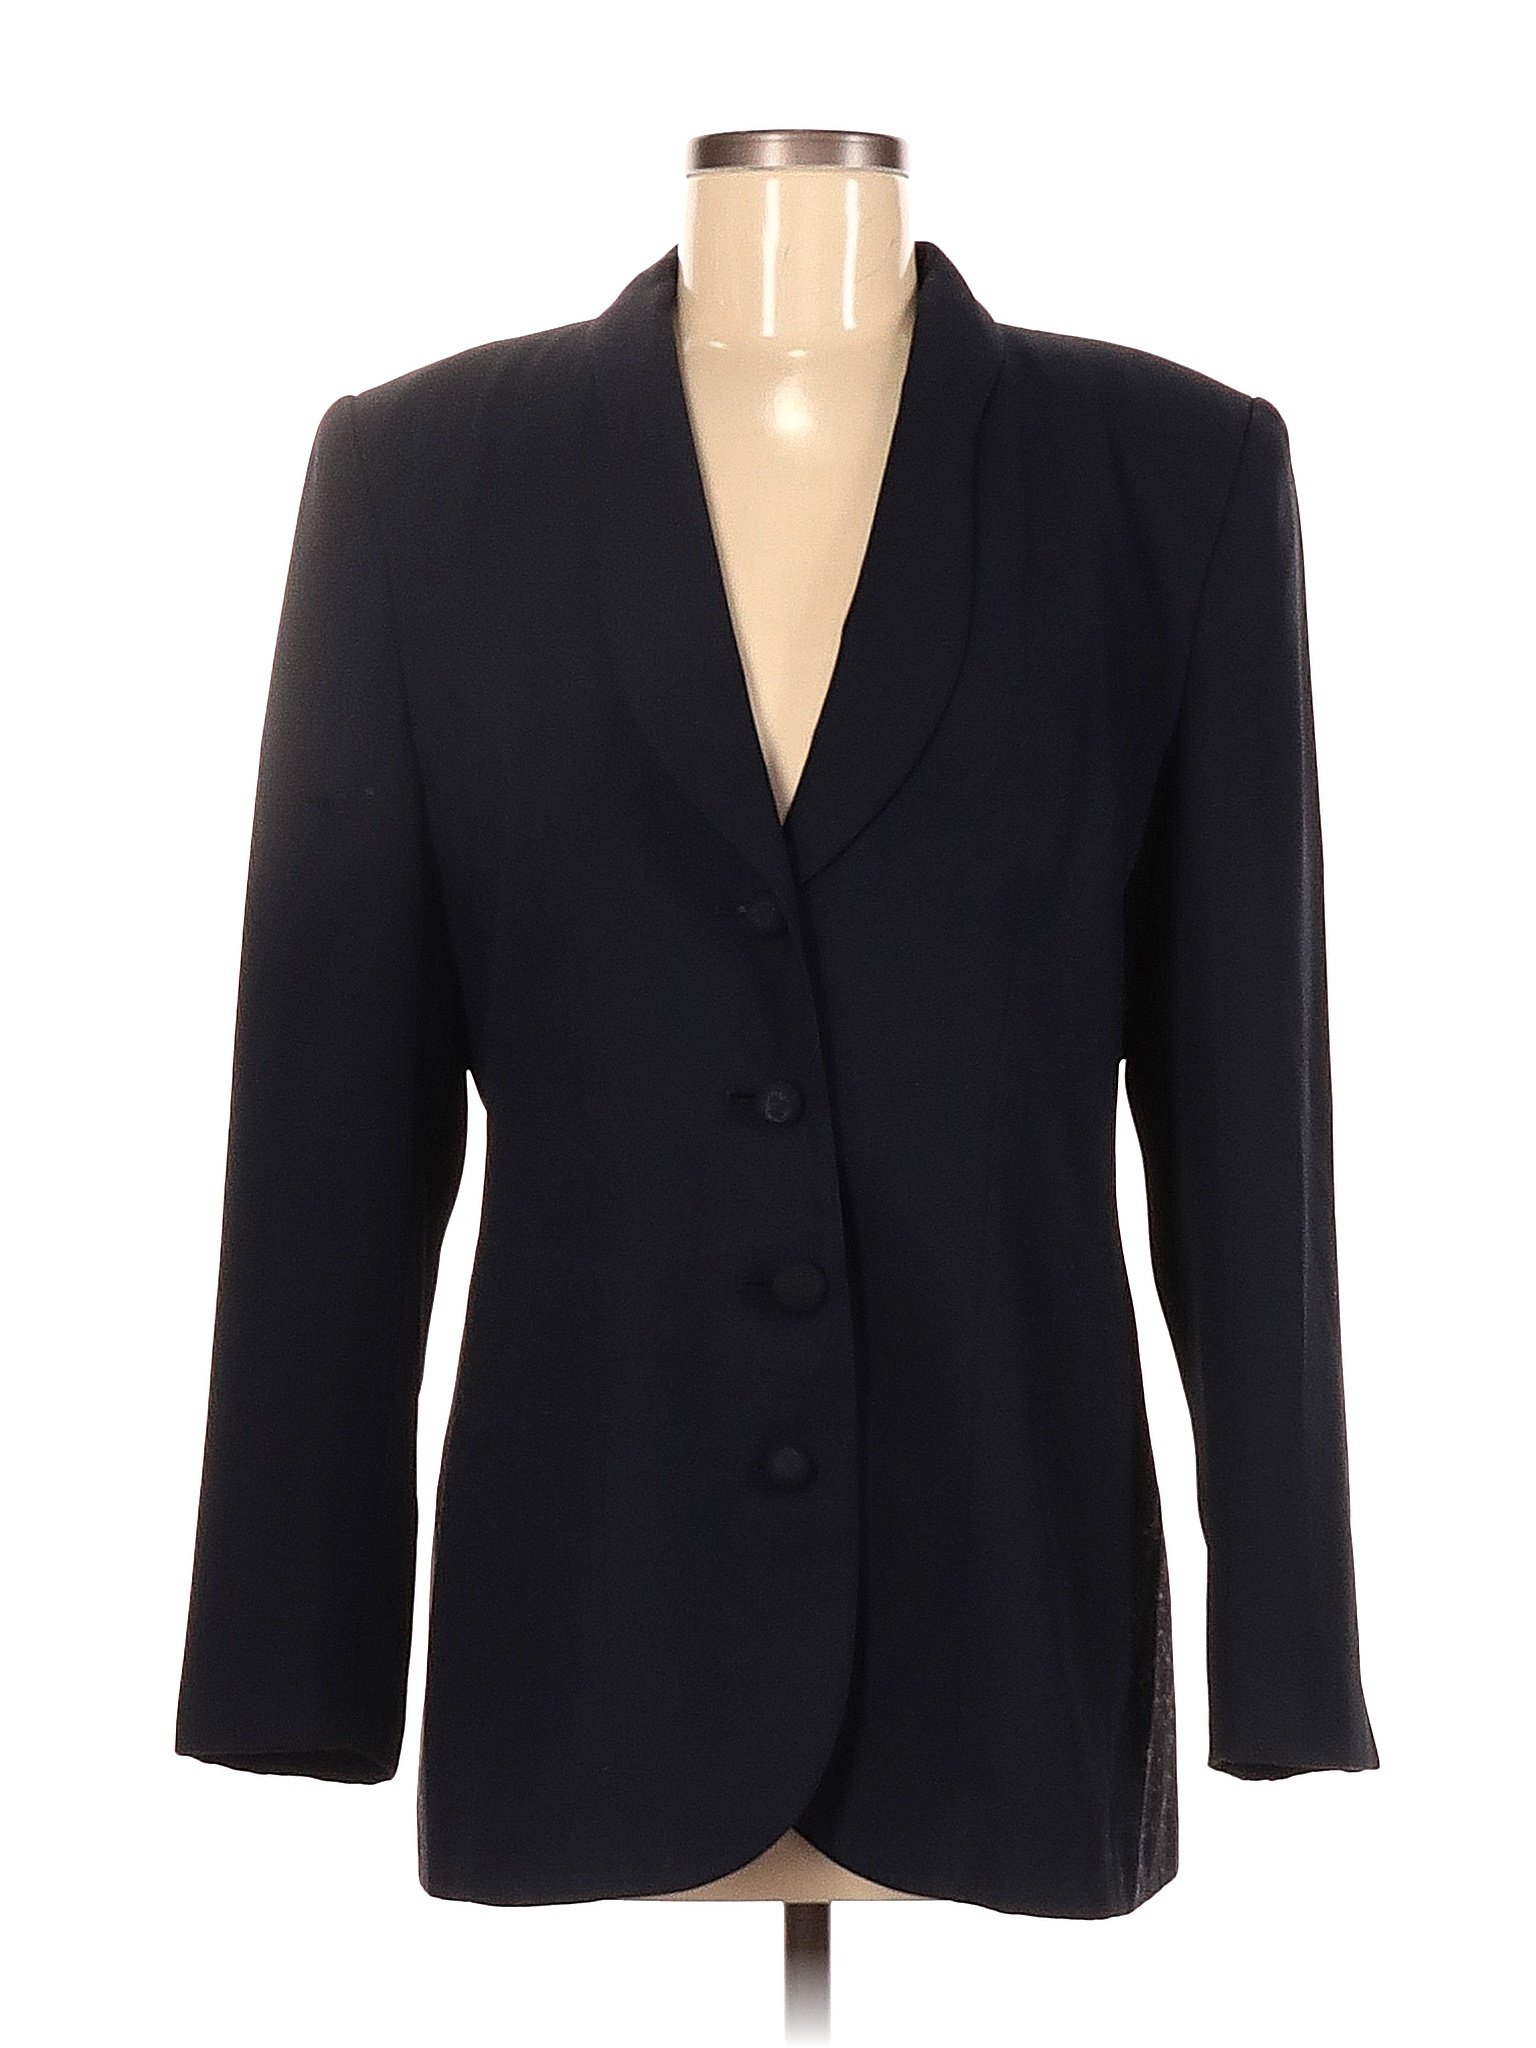 Le Suit 100% Polyester Solid Black Blue Blazer Size 8 - 83% off | thredUP